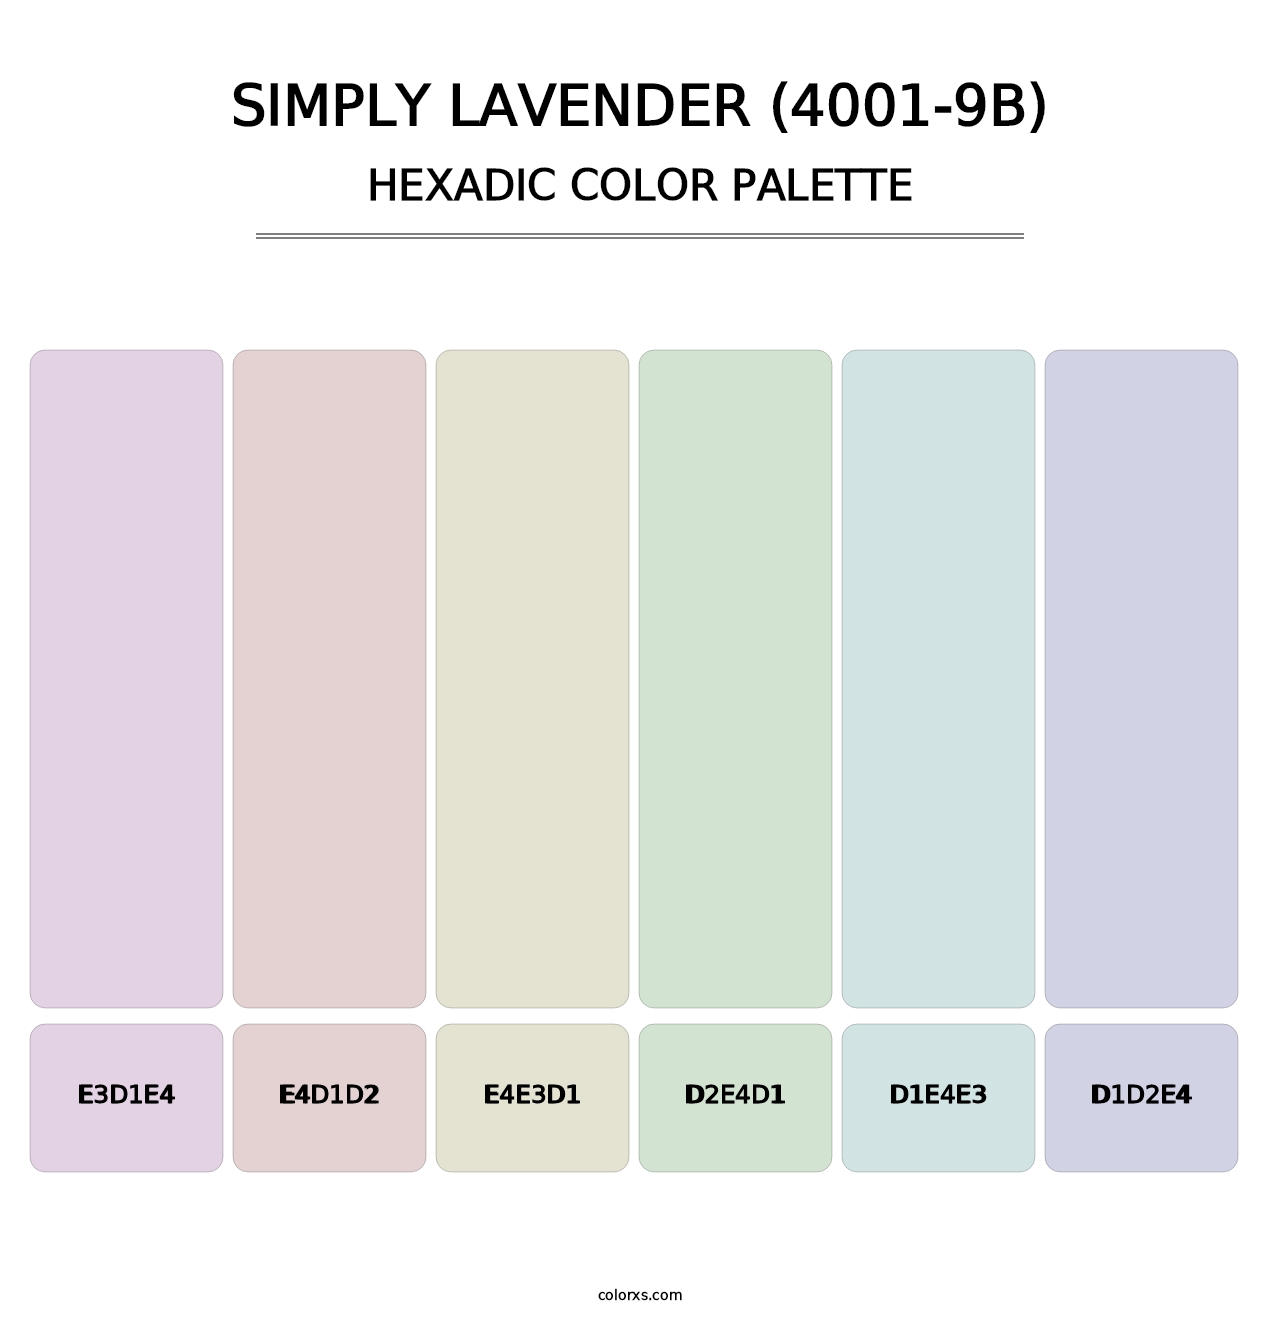 Simply Lavender (4001-9B) - Hexadic Color Palette